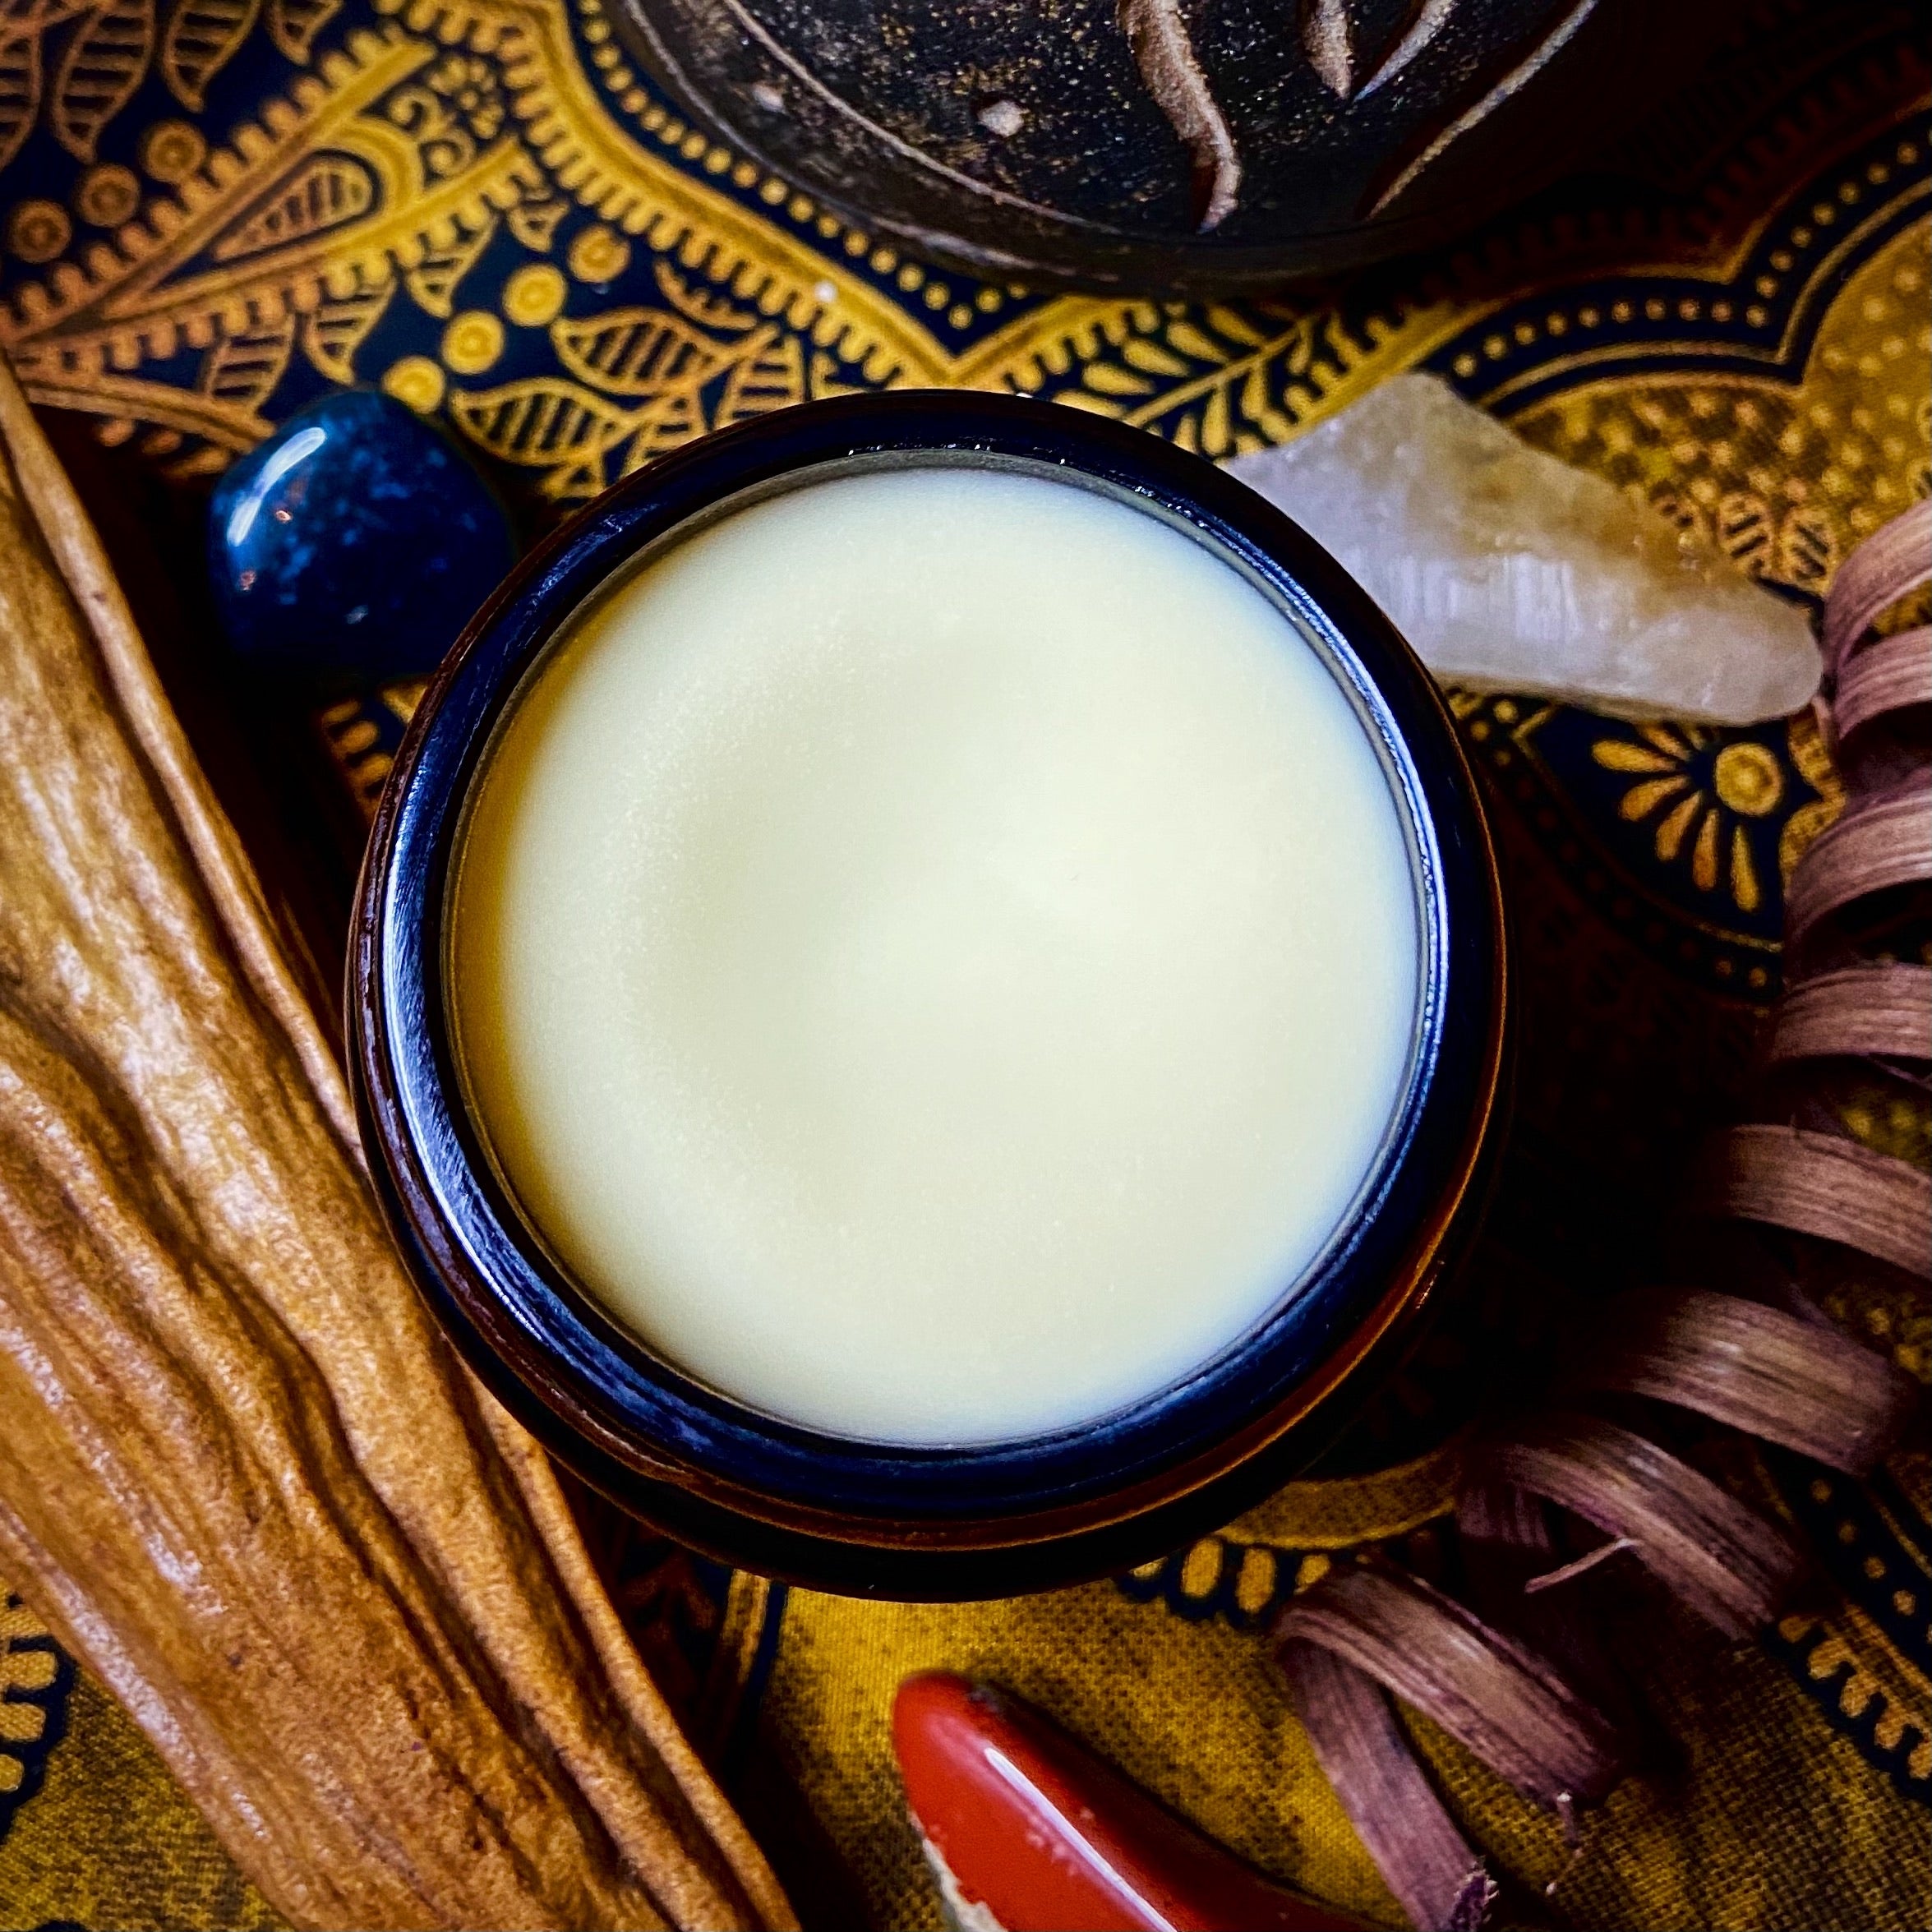 Botanical Shea Butter Cream • IVORY